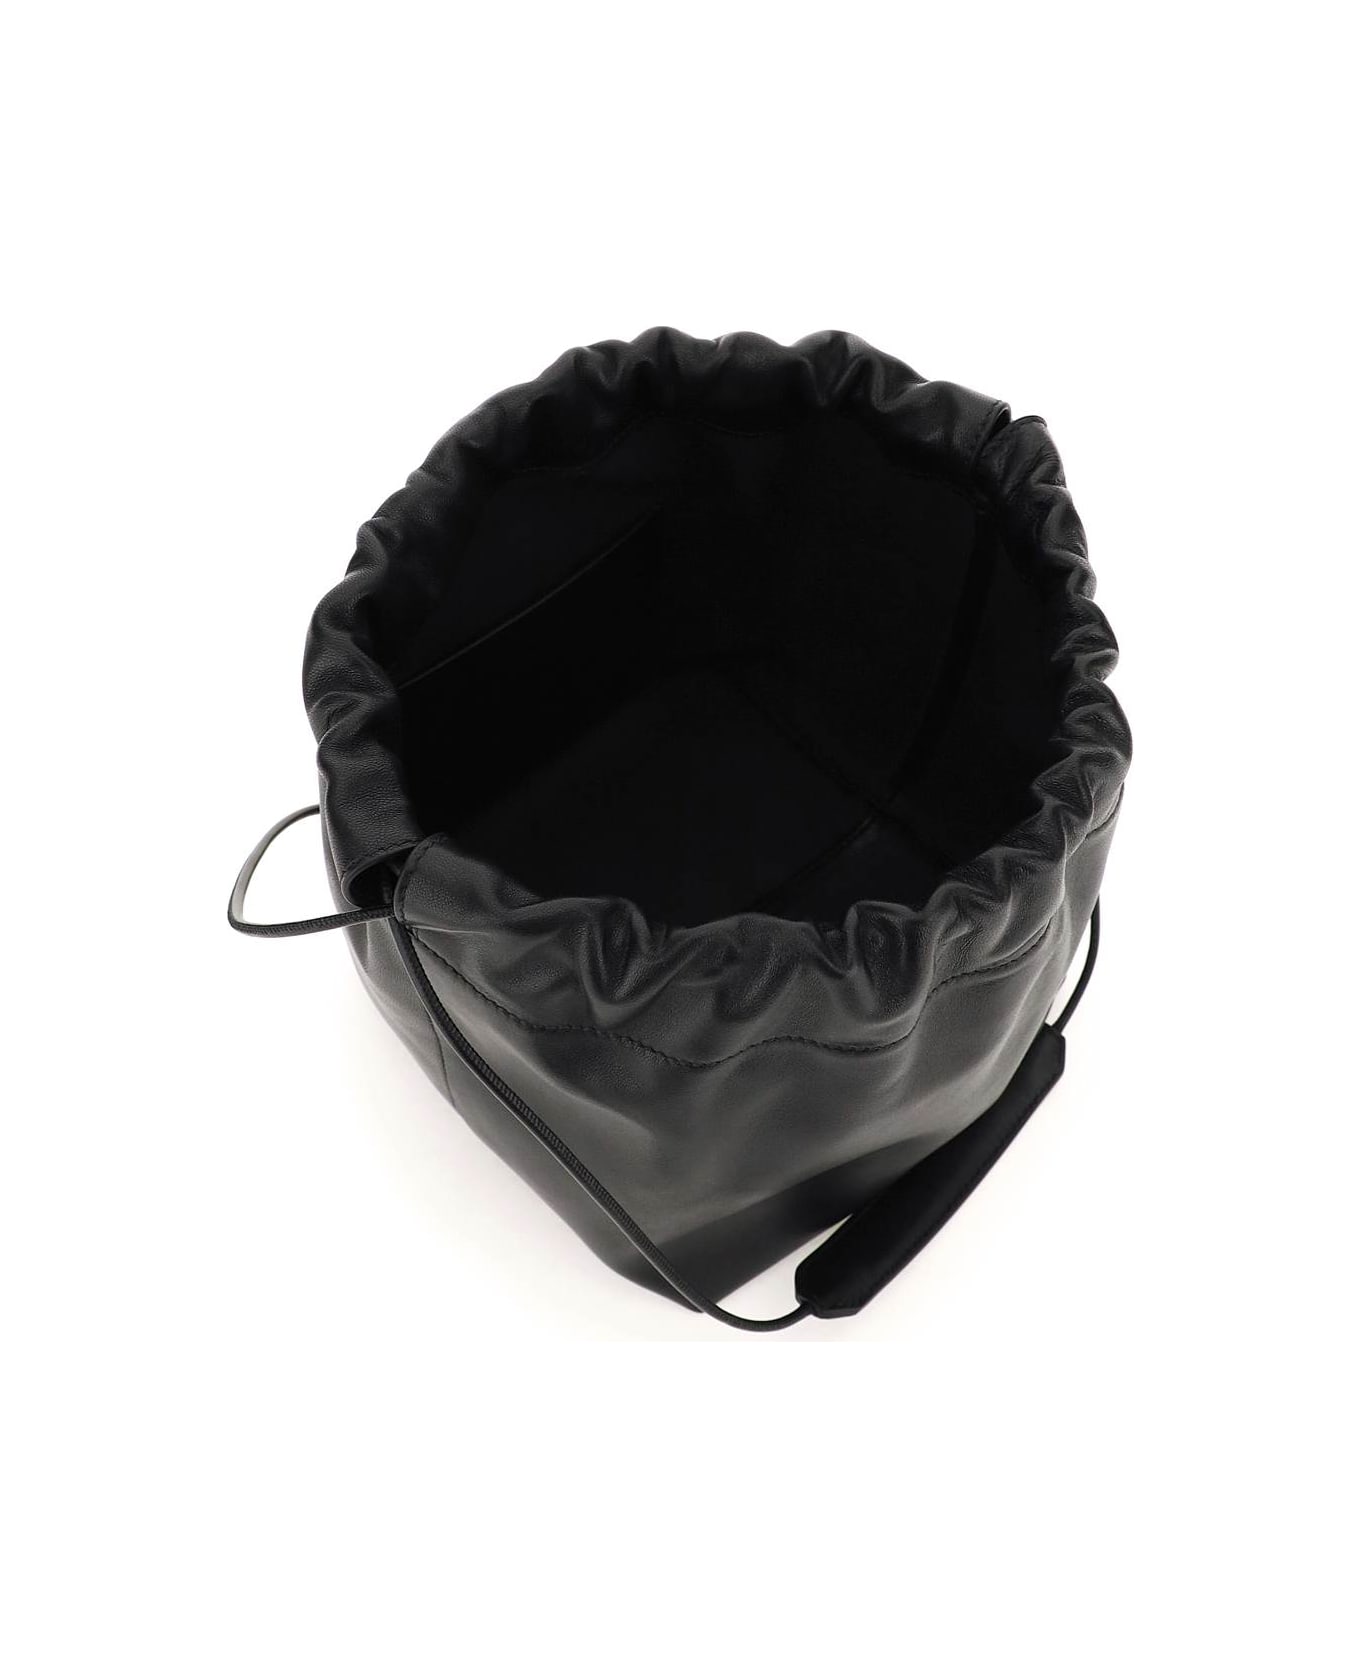 Jil Sander Black Leather Bag - Black ショルダーバッグ